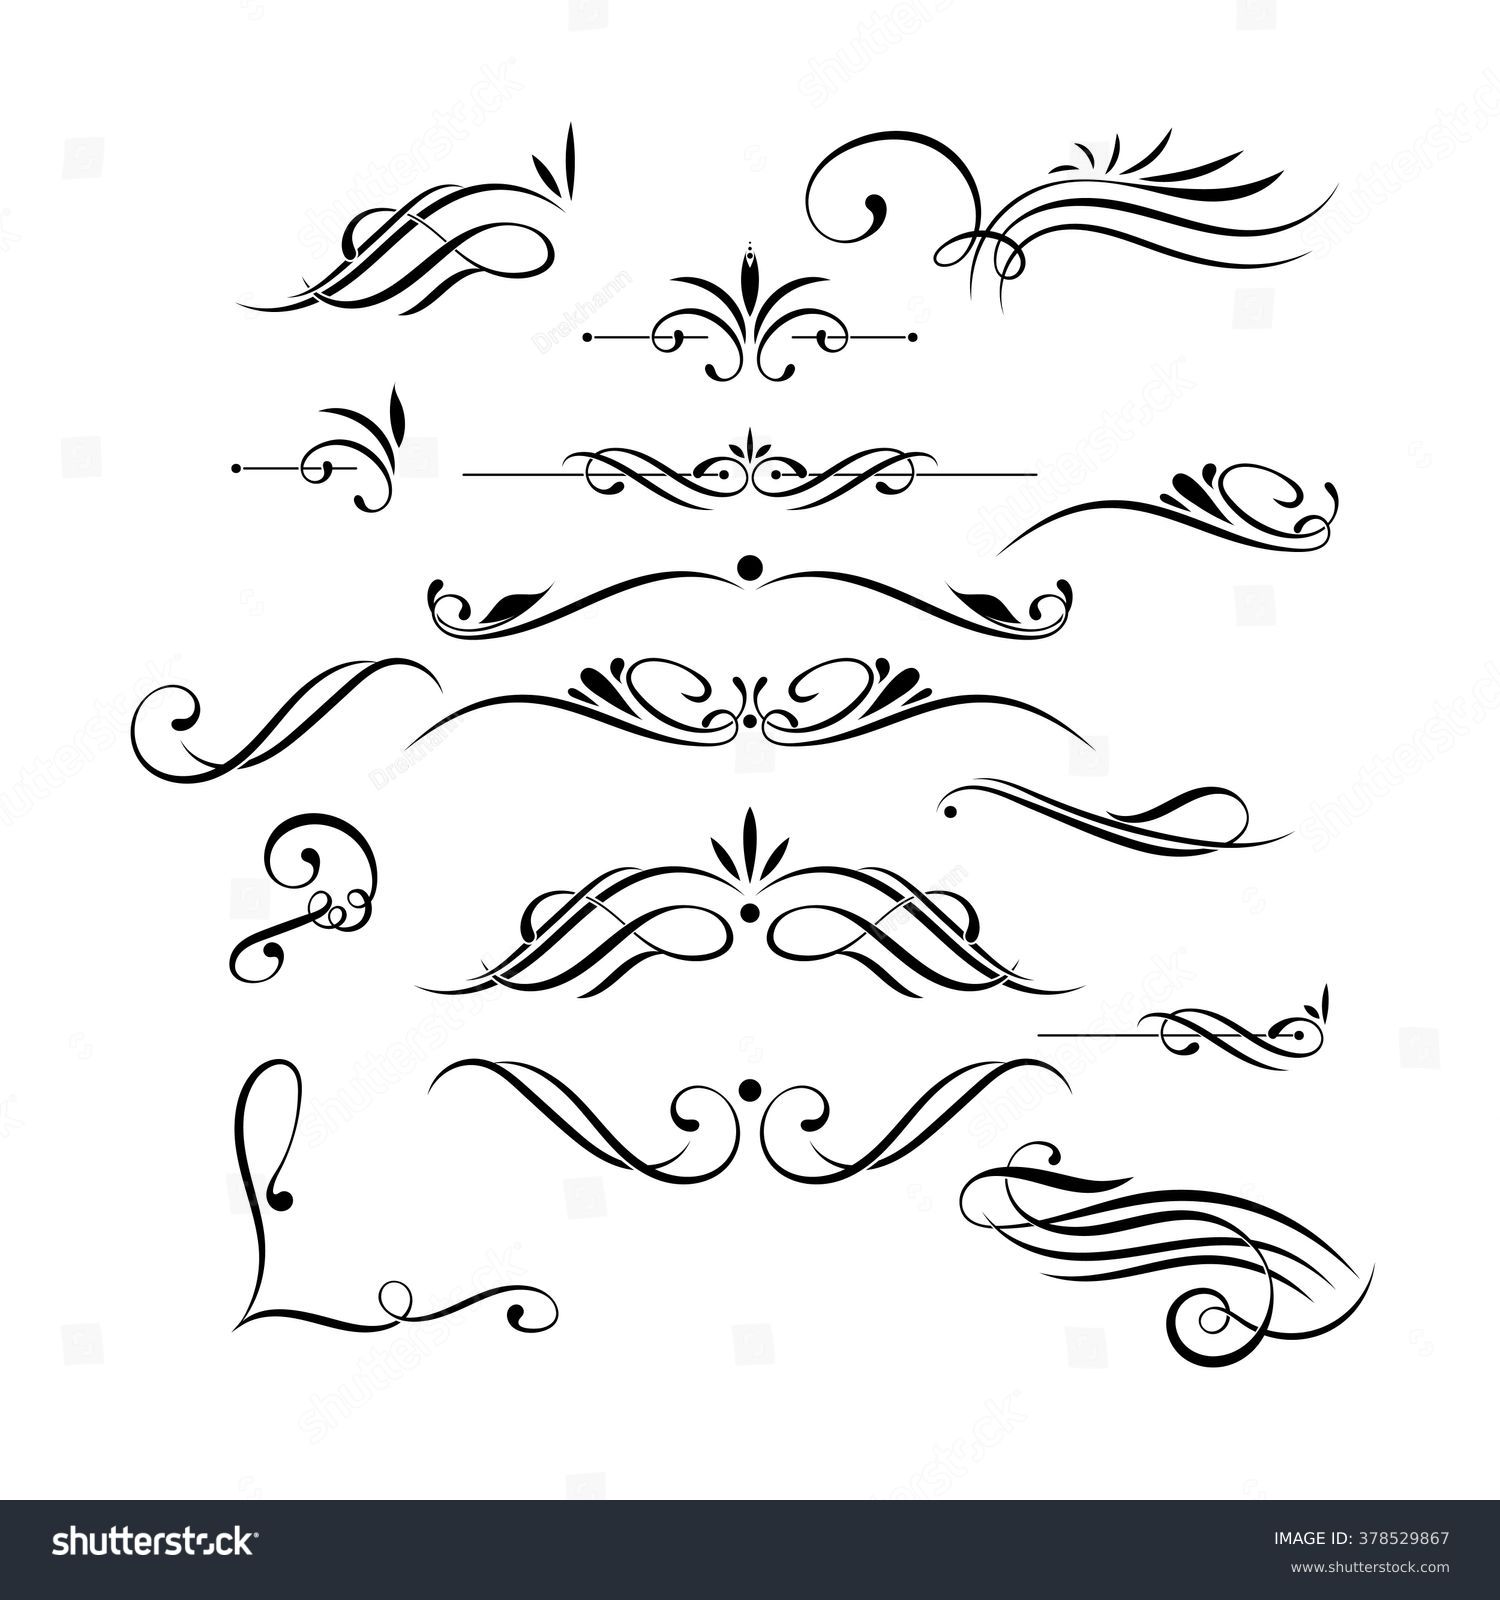 Vector set of elegant curls and swirls. Elements for design. Ornate lines. #378529867